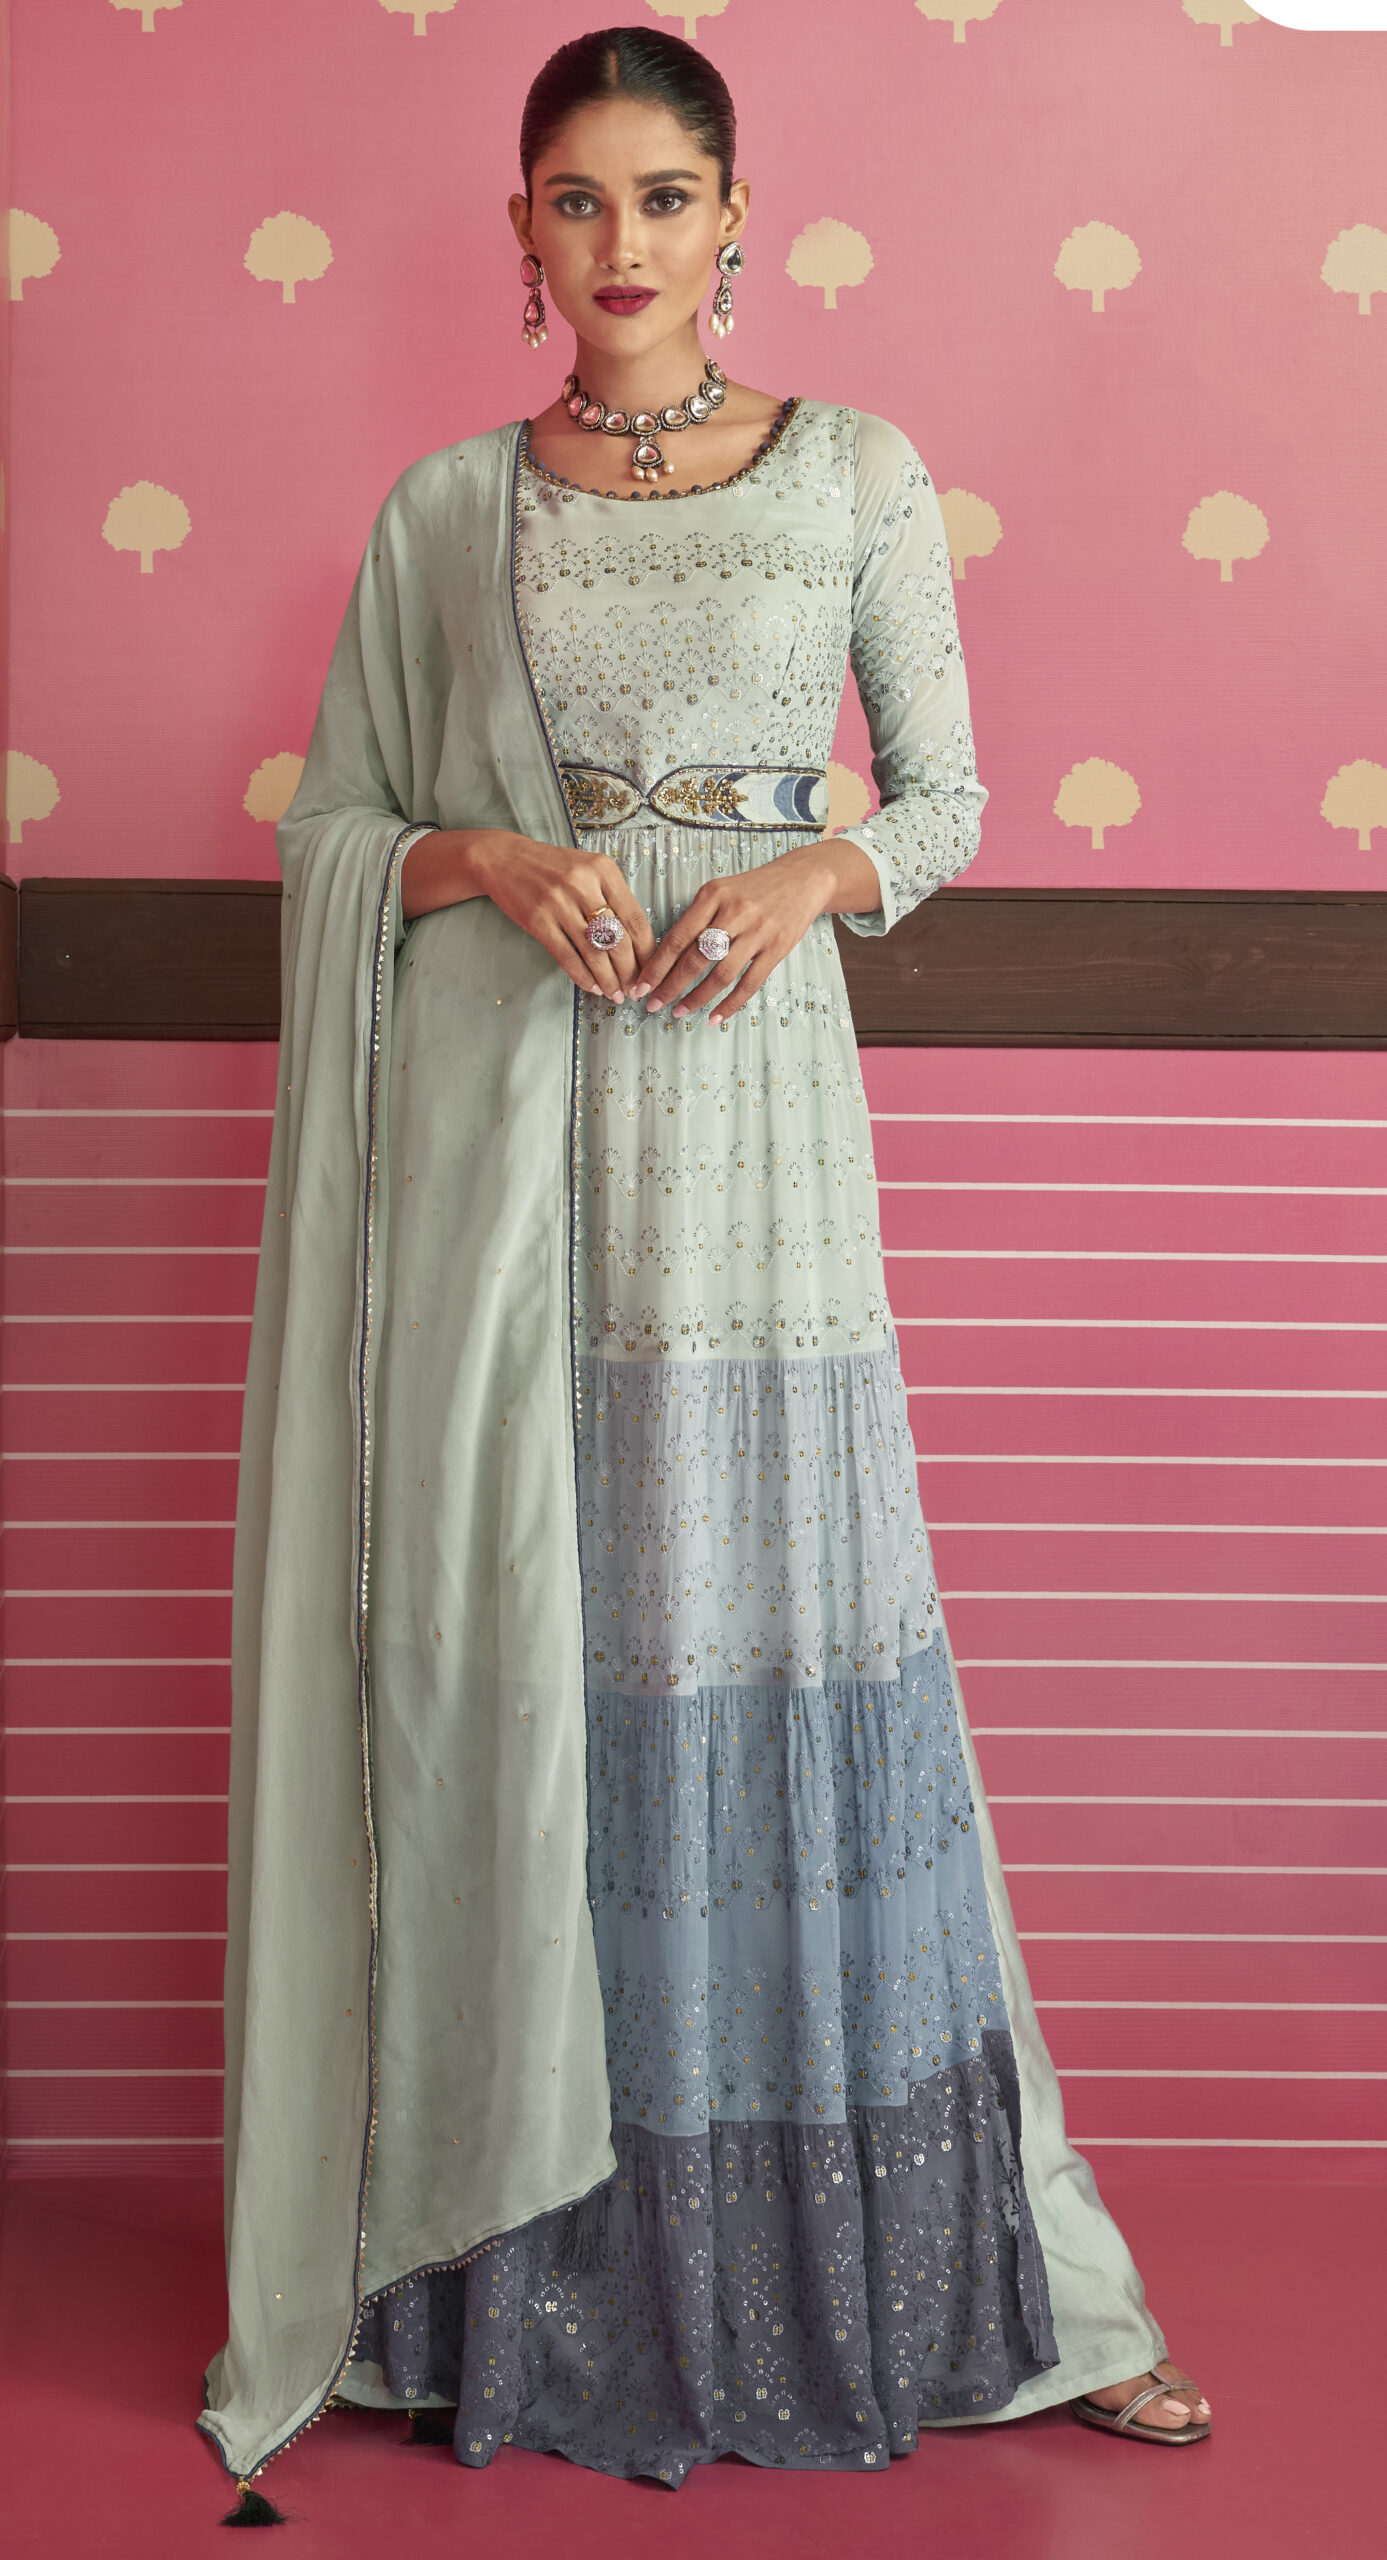 Ayla Pleated Satin Gown - Sunlight Gold – Niswa Fashion